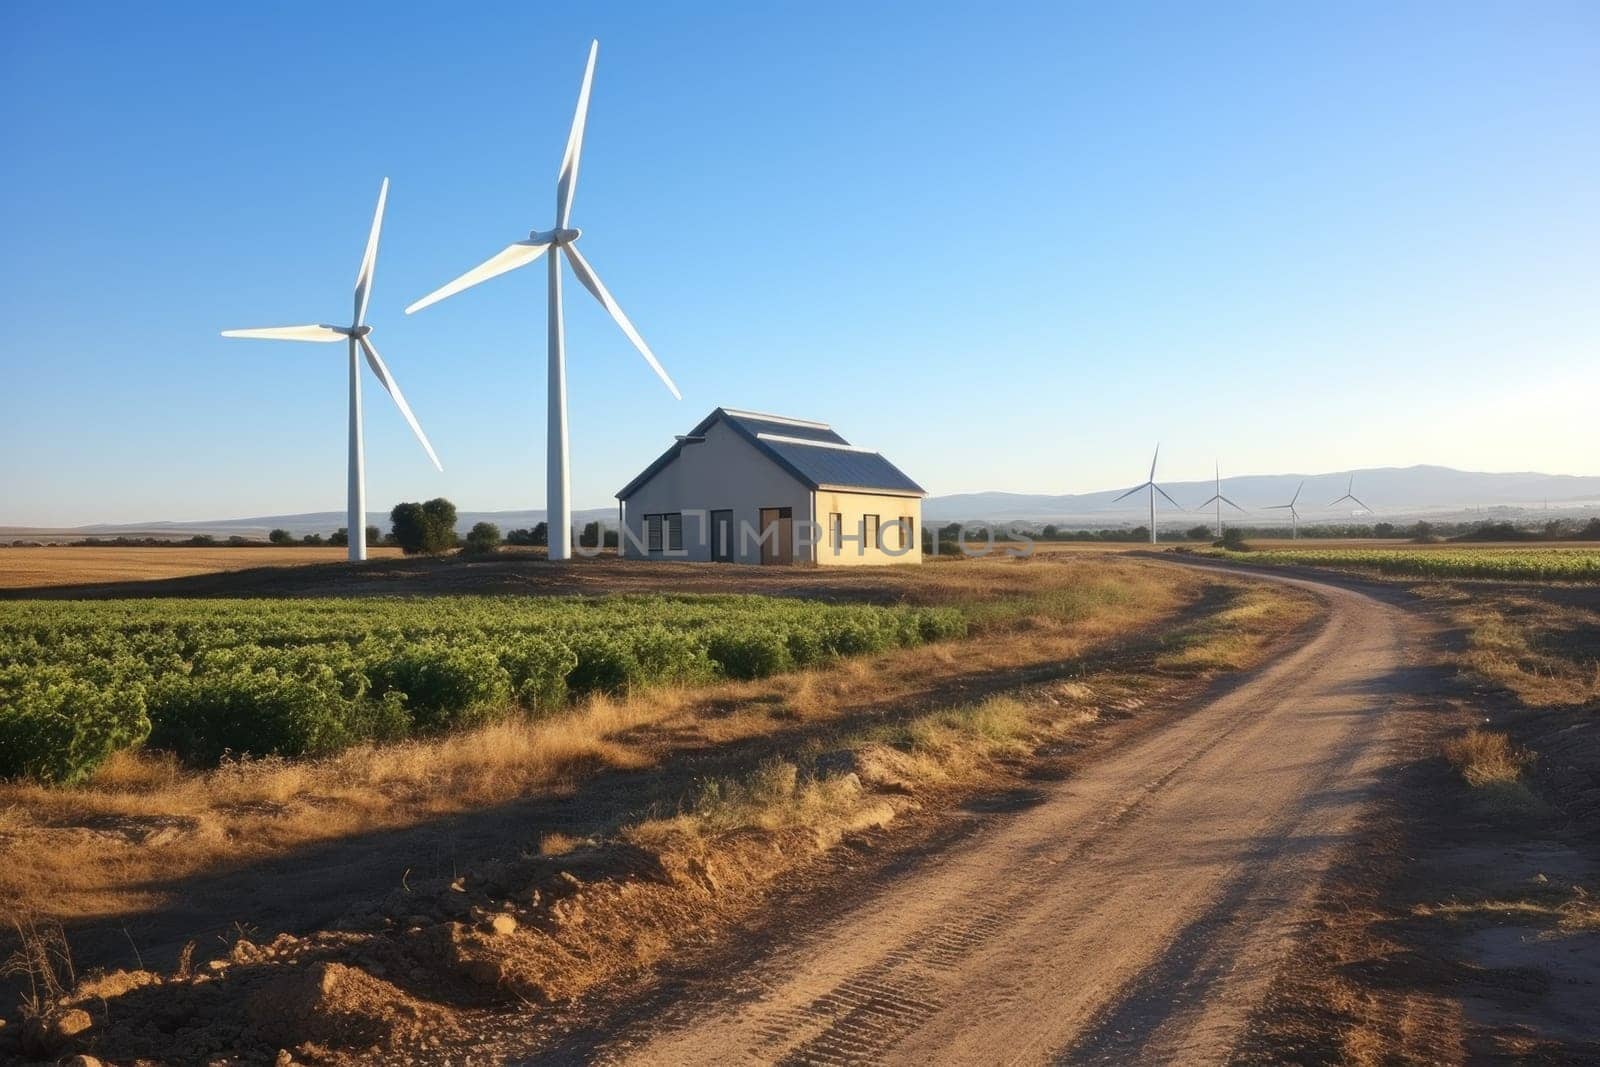 A wind farm with massive wind turbines.